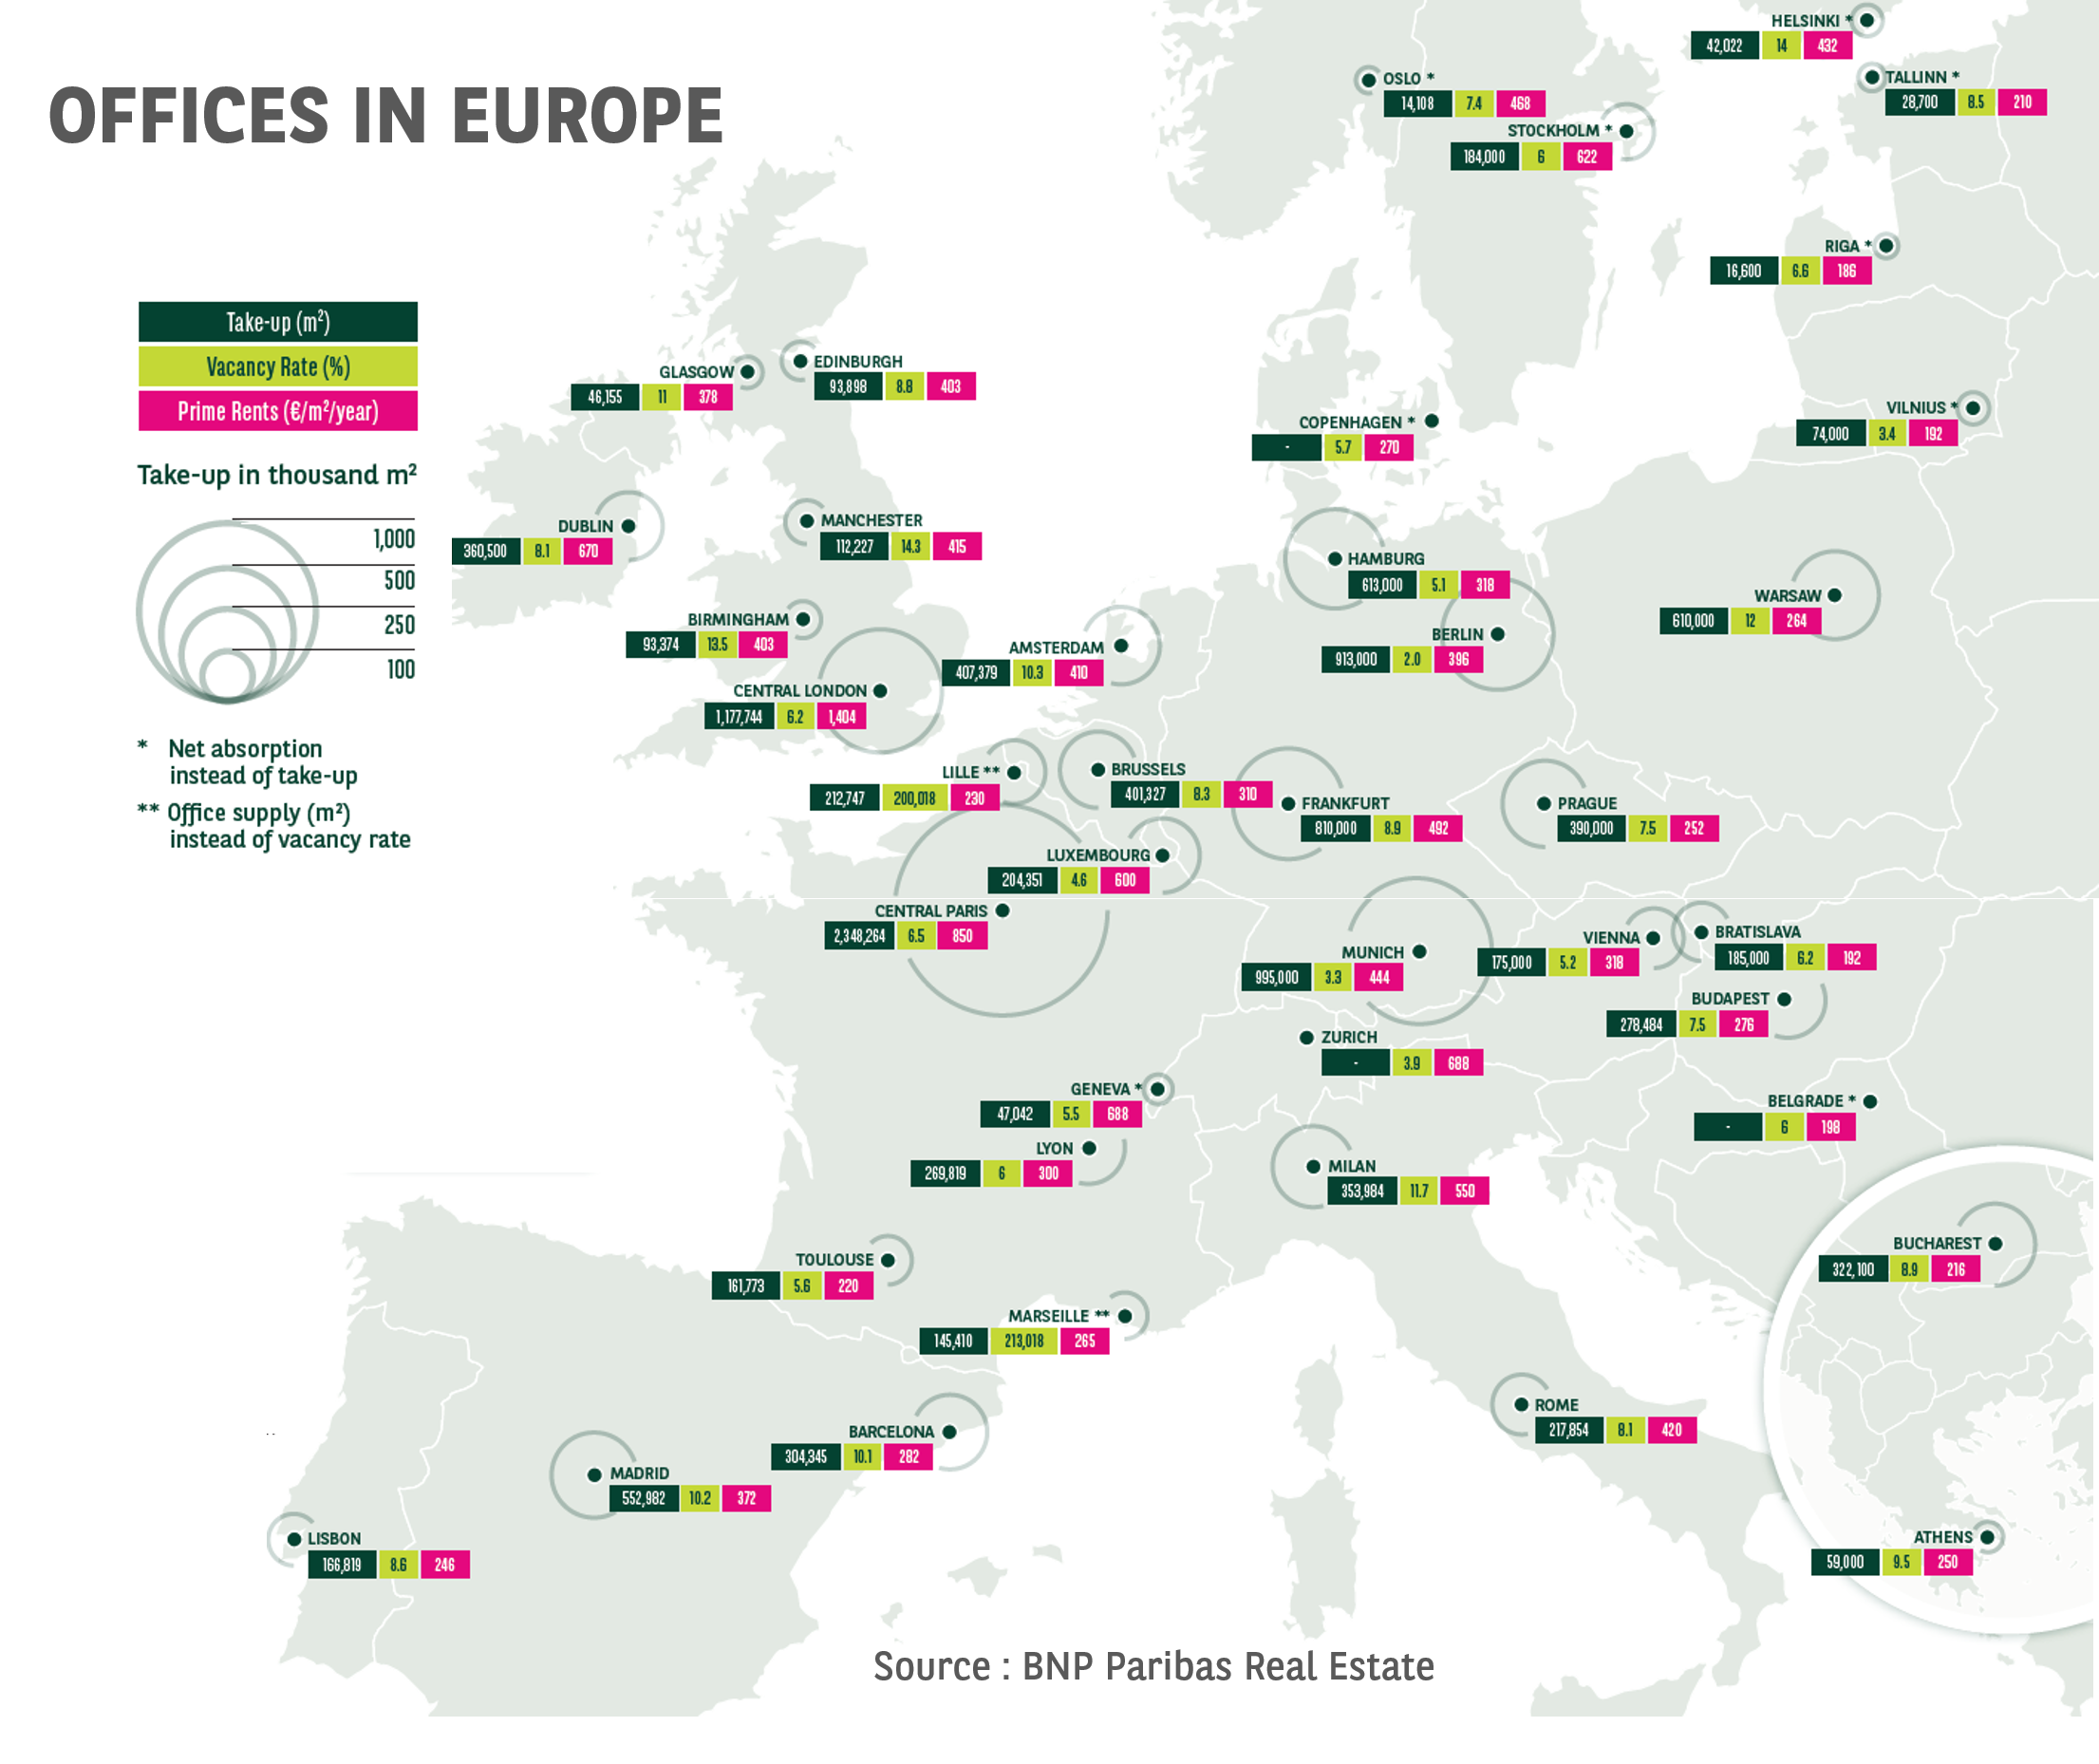 Officies in Europe